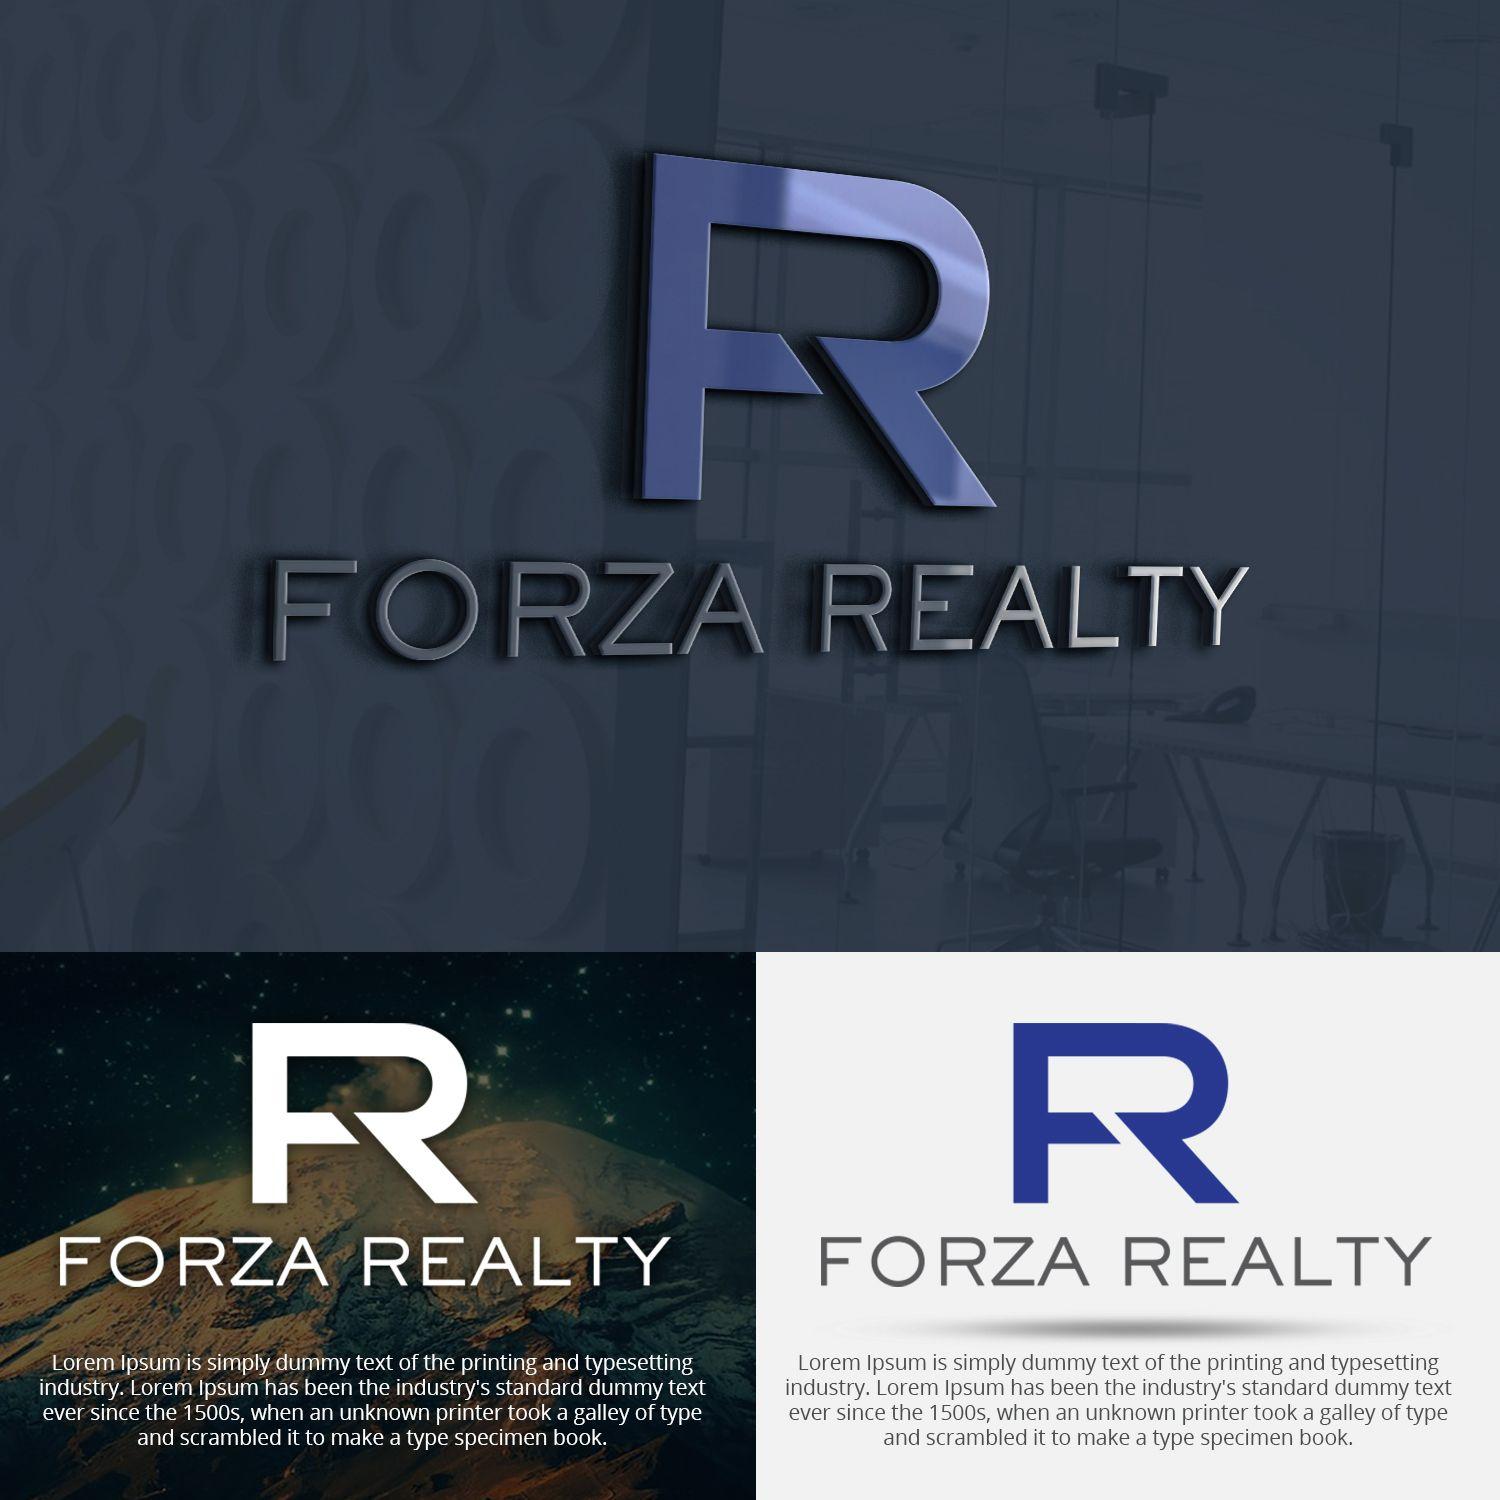 Forza 2 Logo - Professional, Elegant, Real Estate Logo Design for Forza Realty